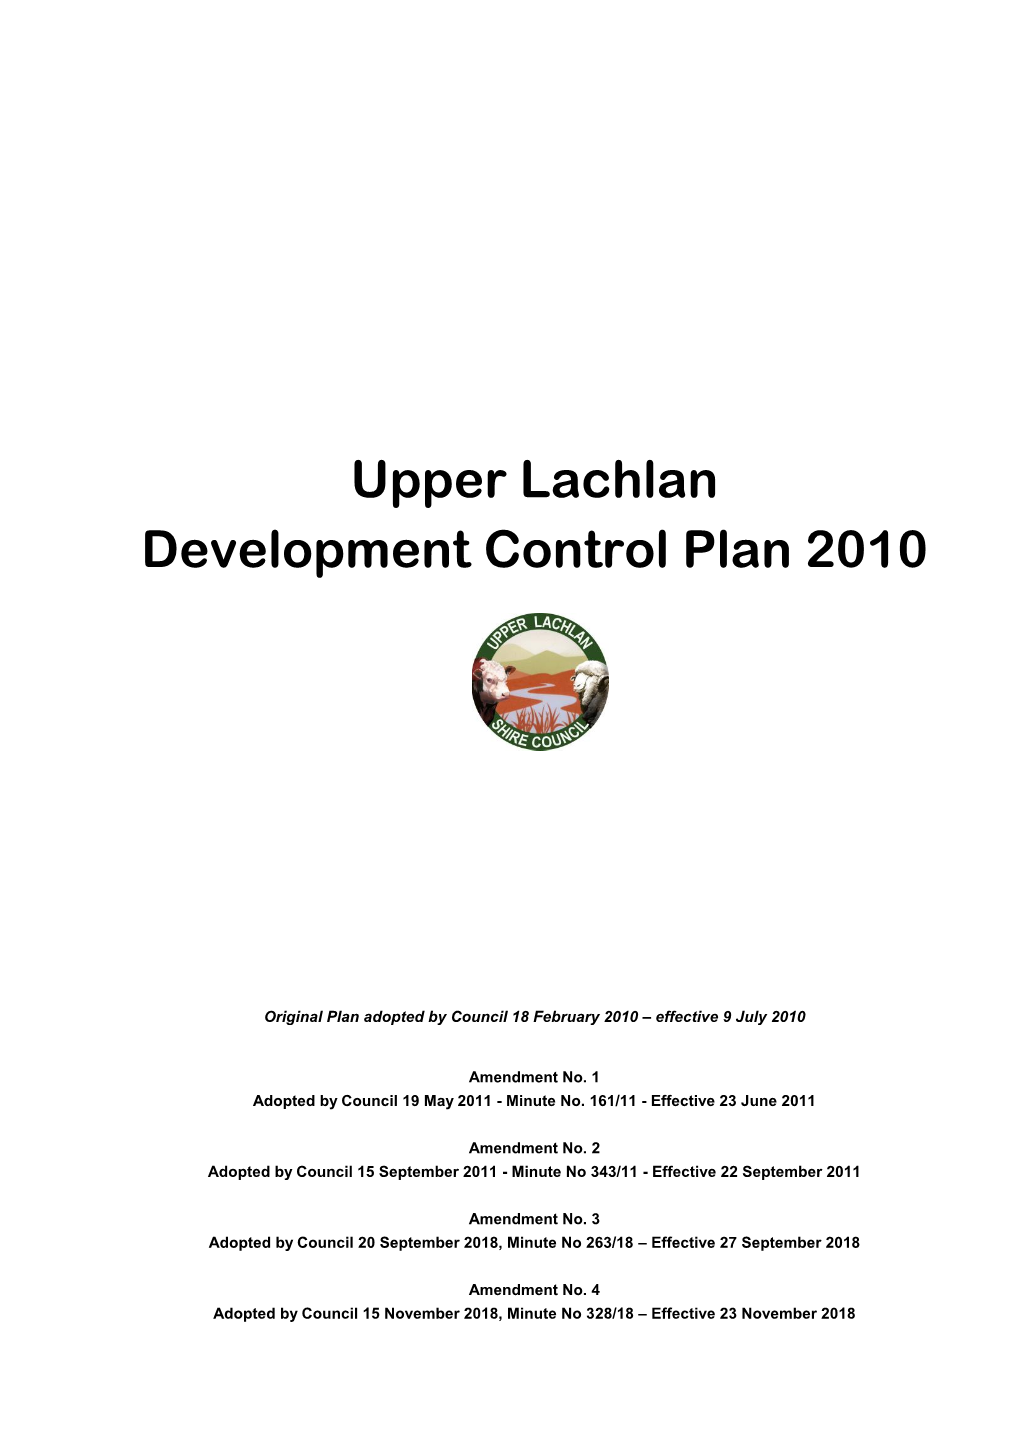 Upper Lachlan Development Control Plan 2010